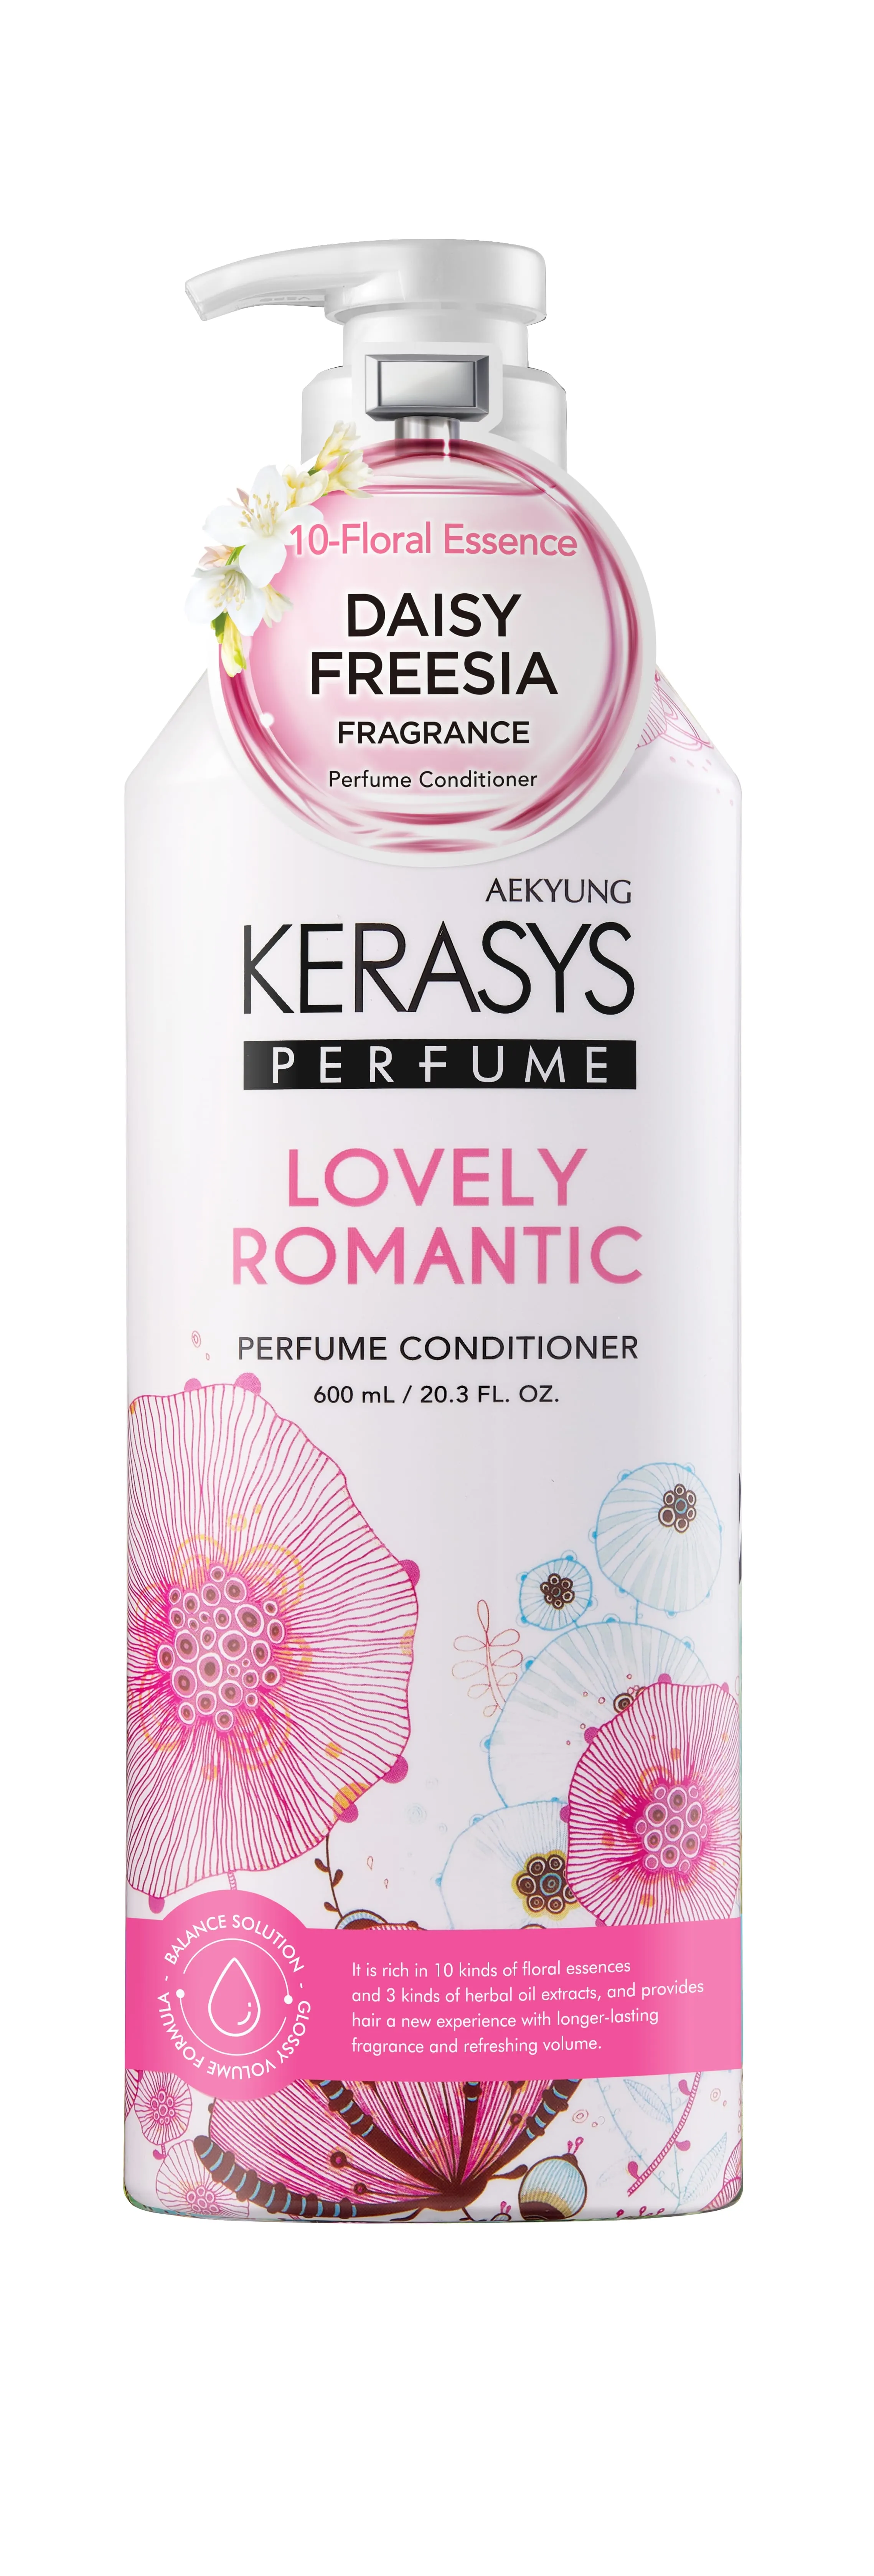 Aekyung Kerasys Parfumed Lovely & Romantic Кондиционер для волос парфюмированный Романтик 600 мл